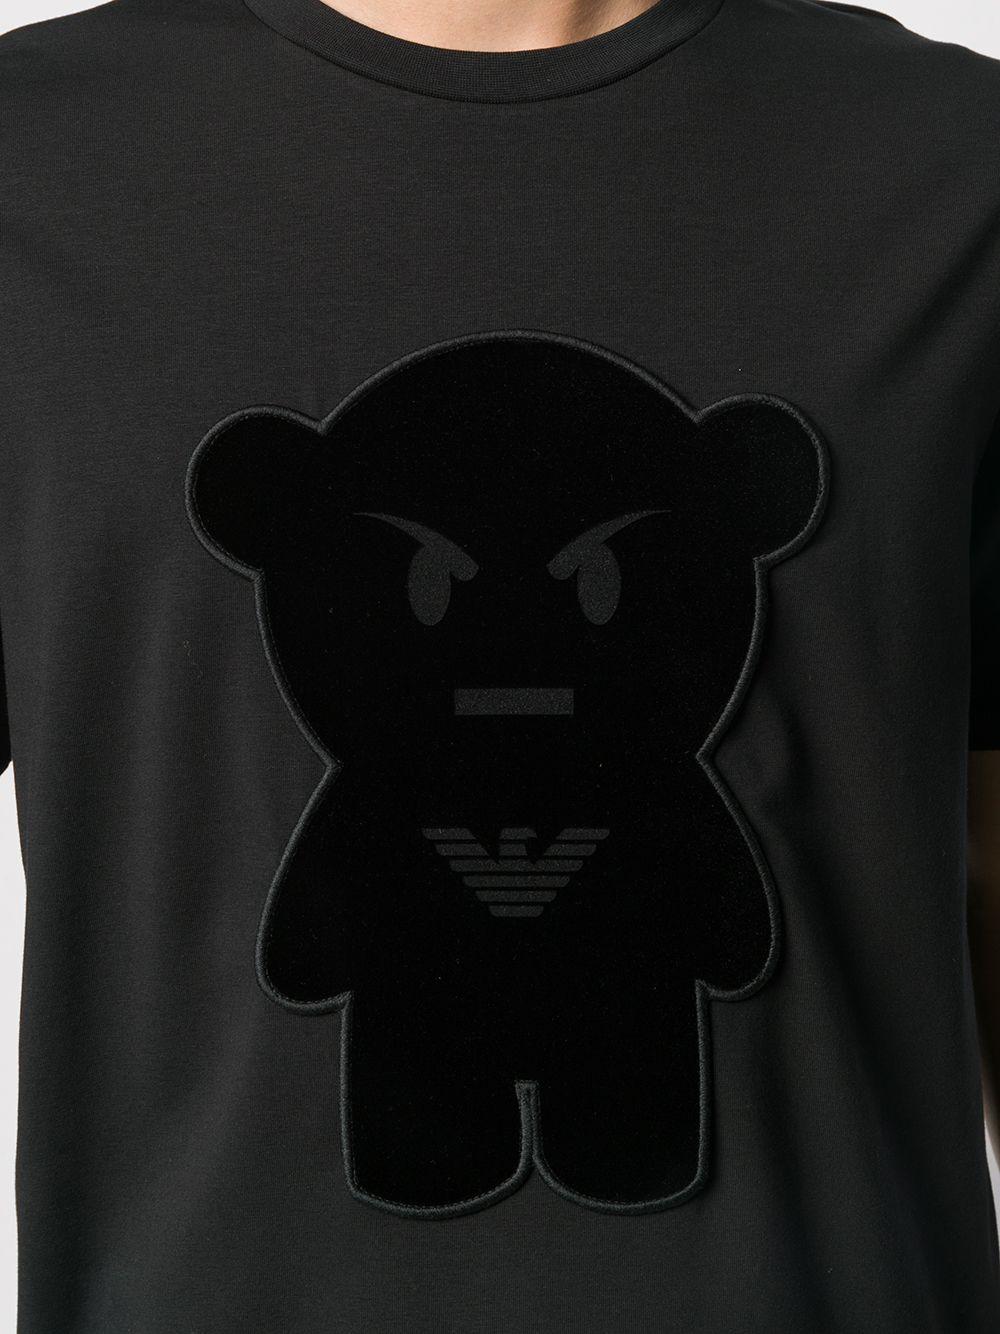 Emporio Armani Manga Bear Cotton T-shirt in Black for Men | Lyst